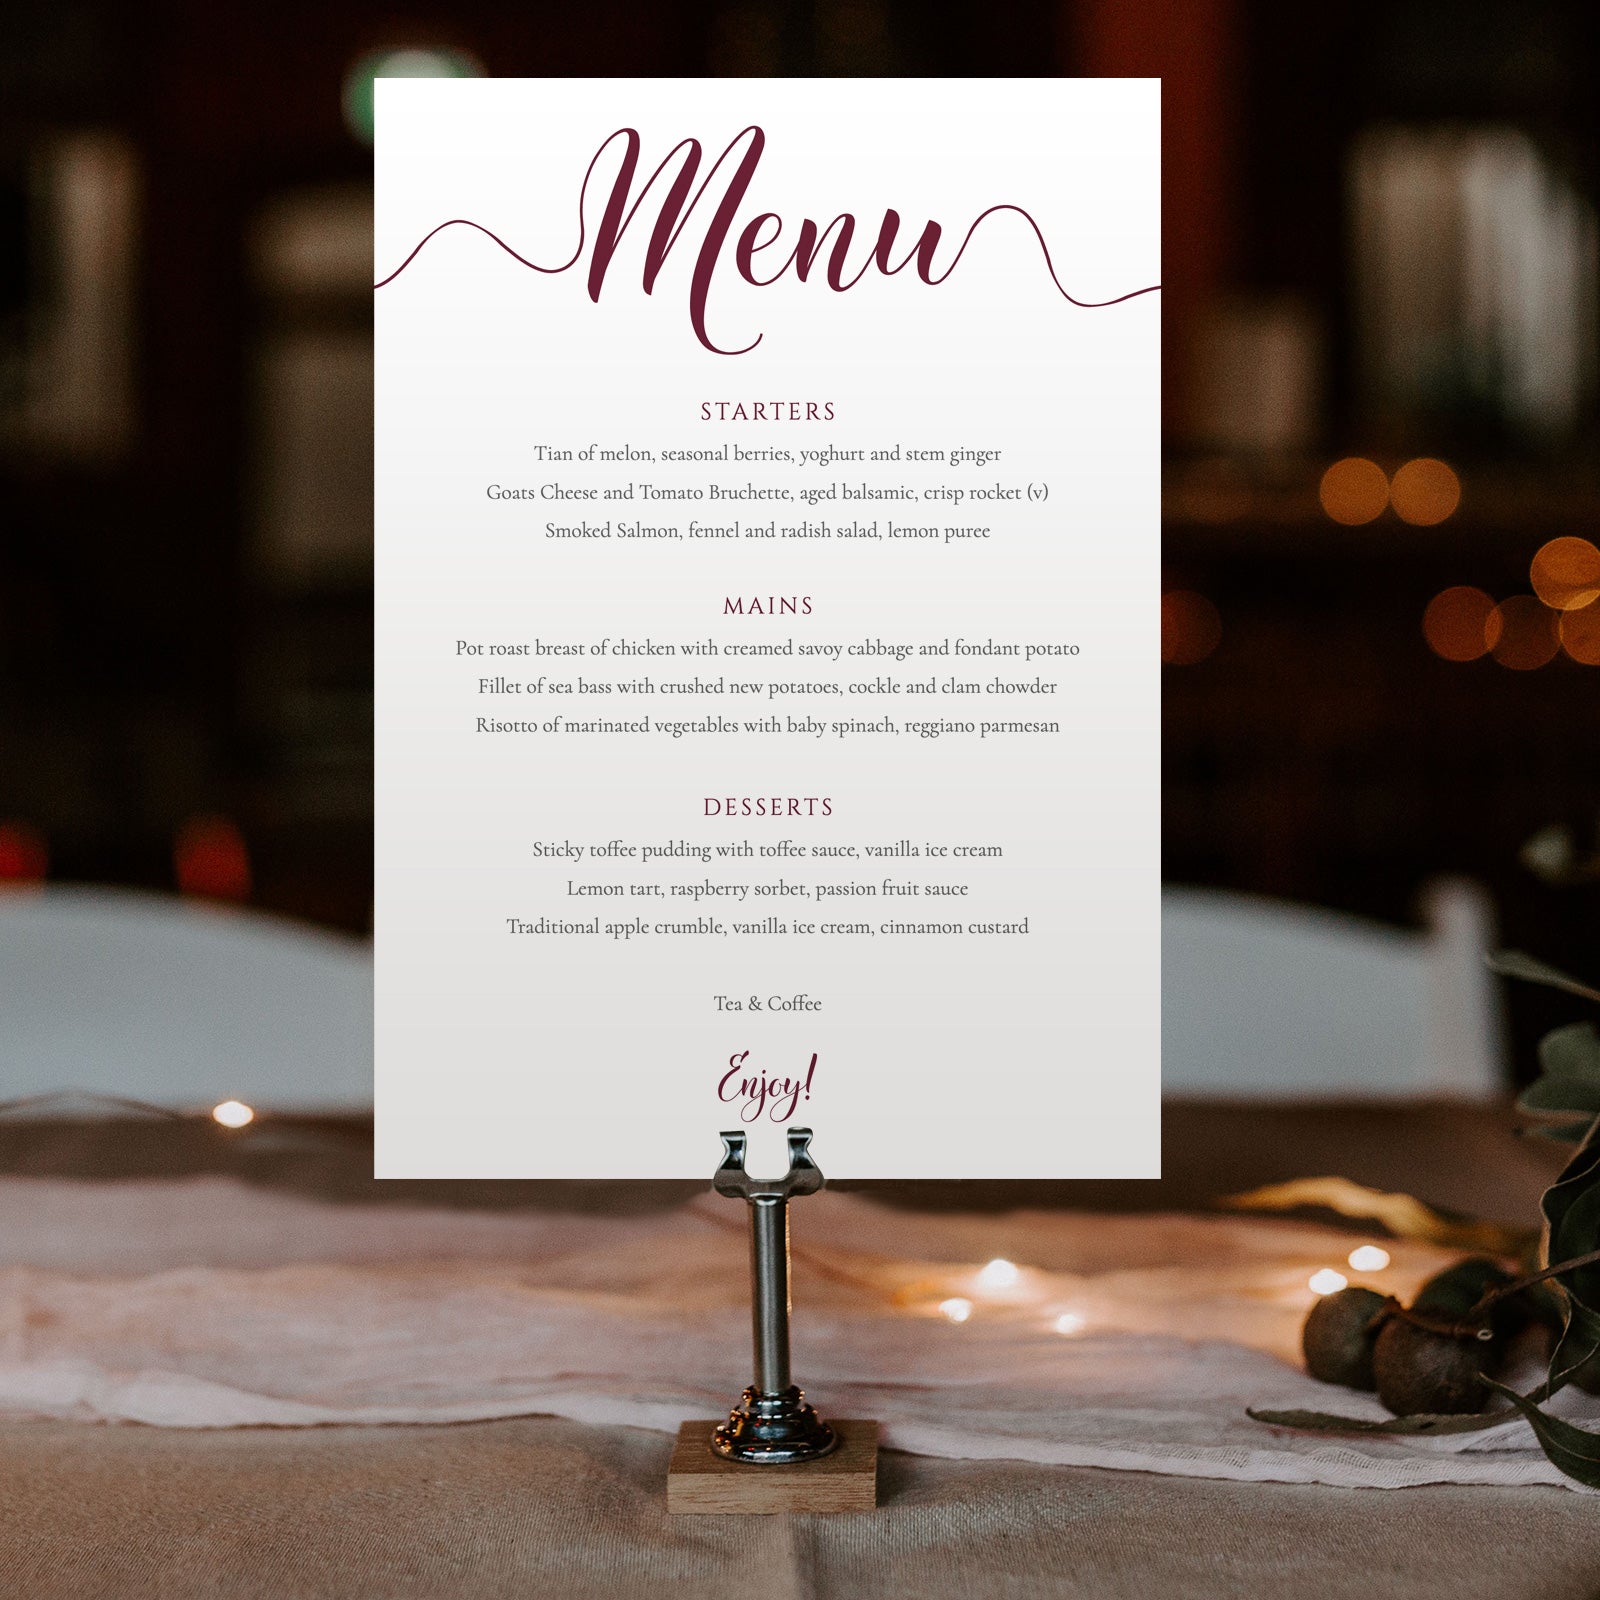 auburn wedding menu card in a menu stand at an evening event